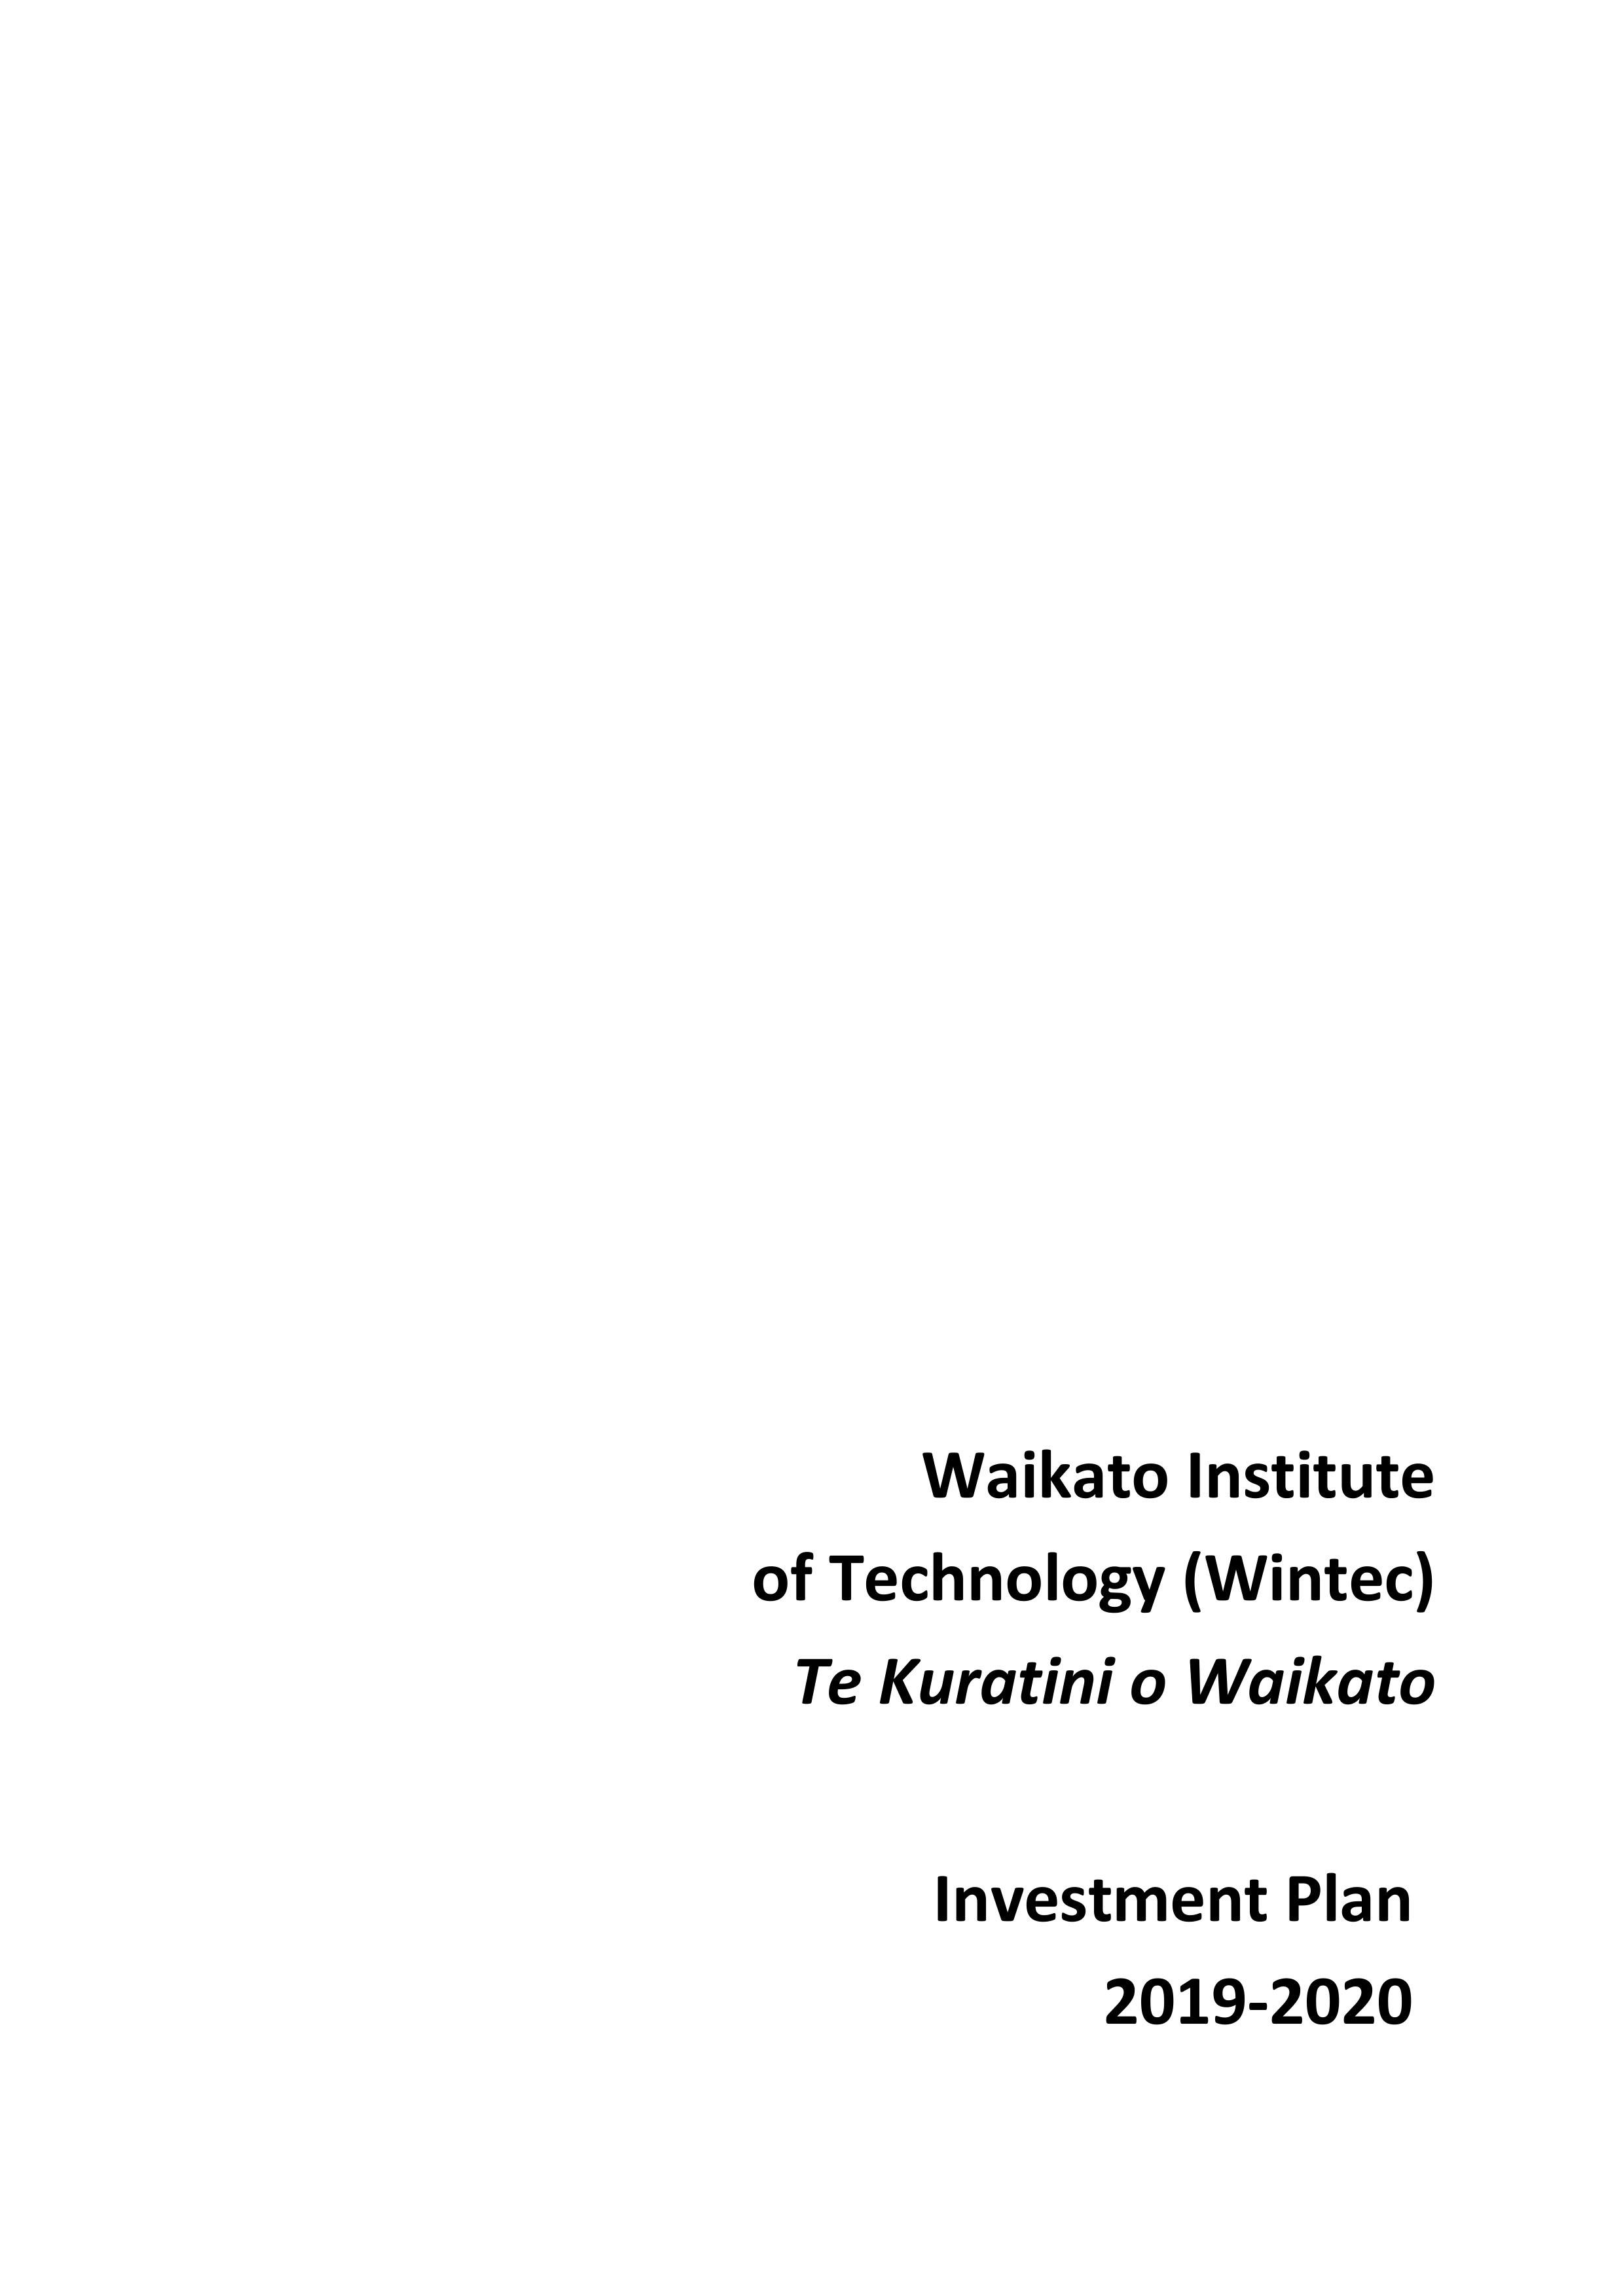 Wintec investment plan 2019-2020